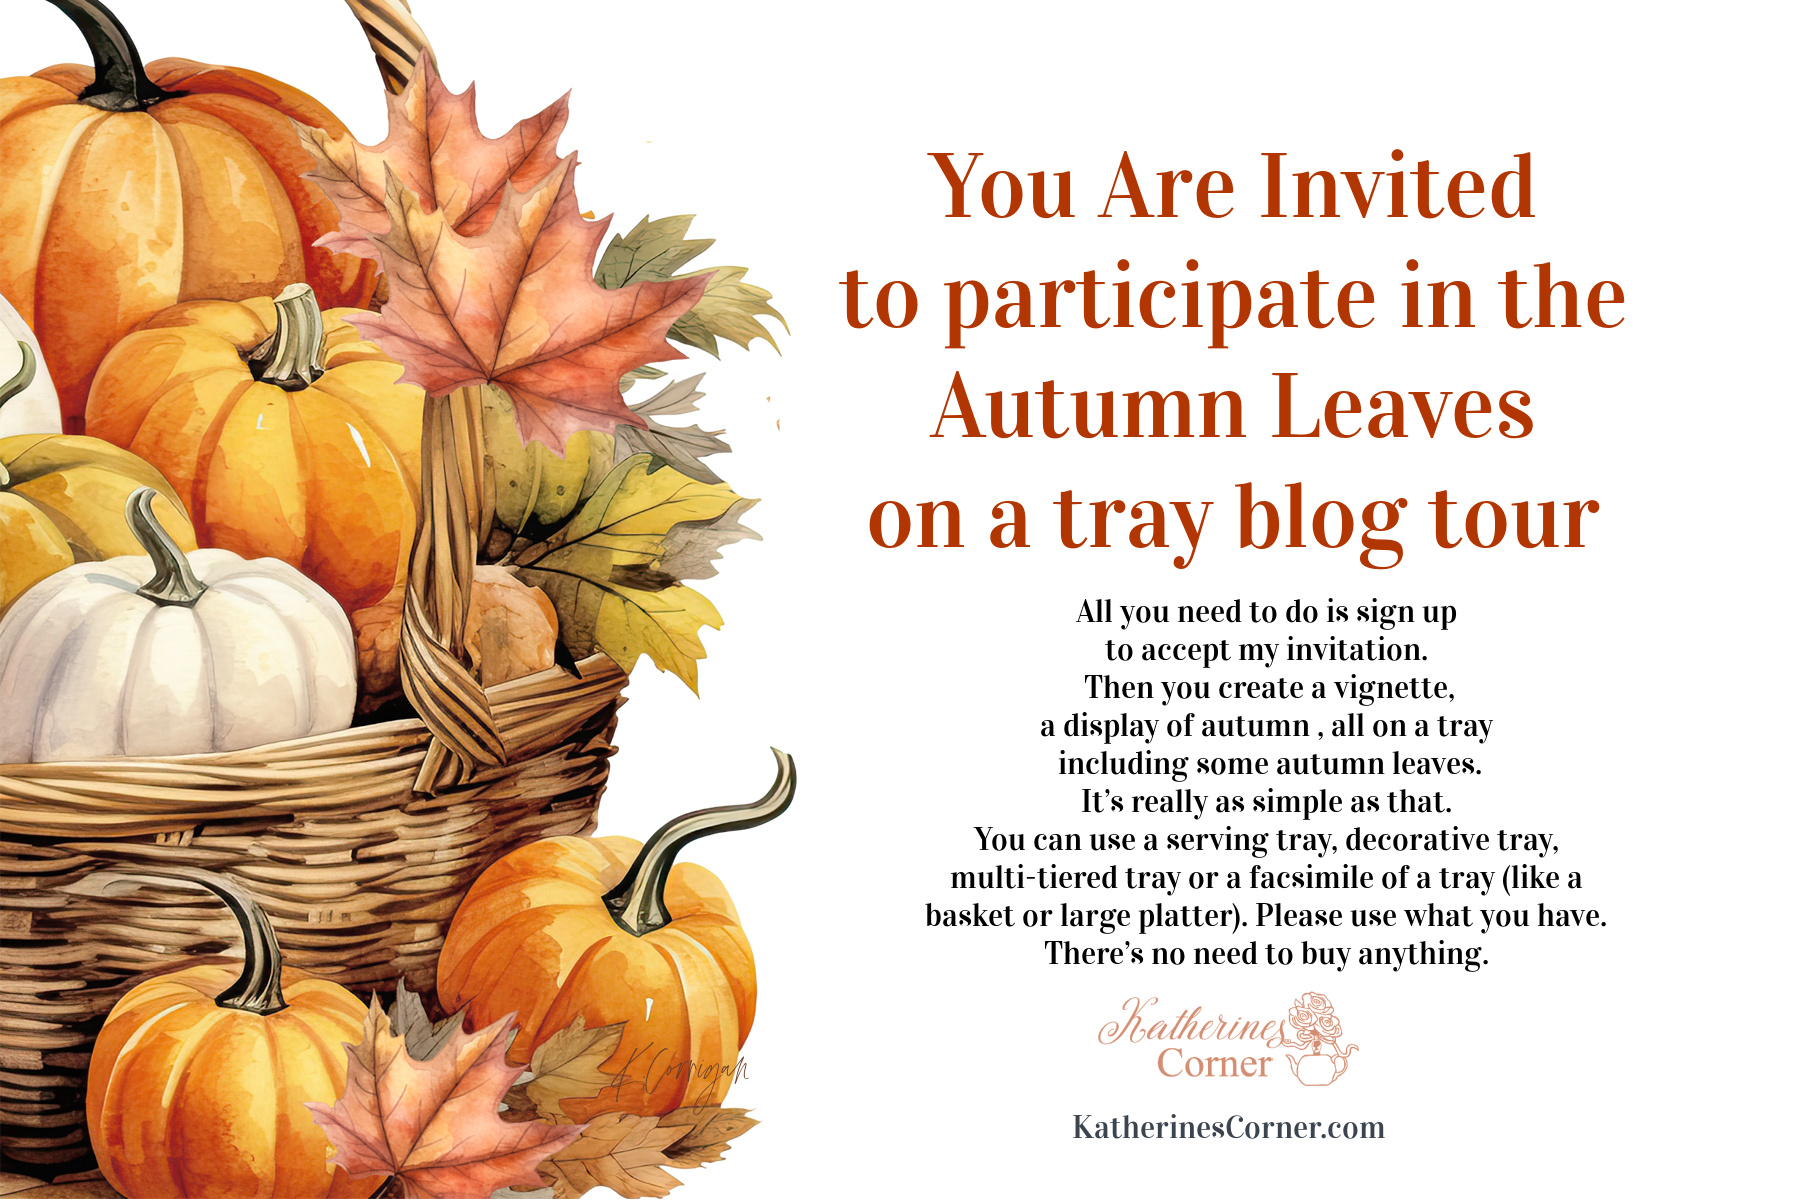 Autumn Leaves on a Tray Tour Invitation